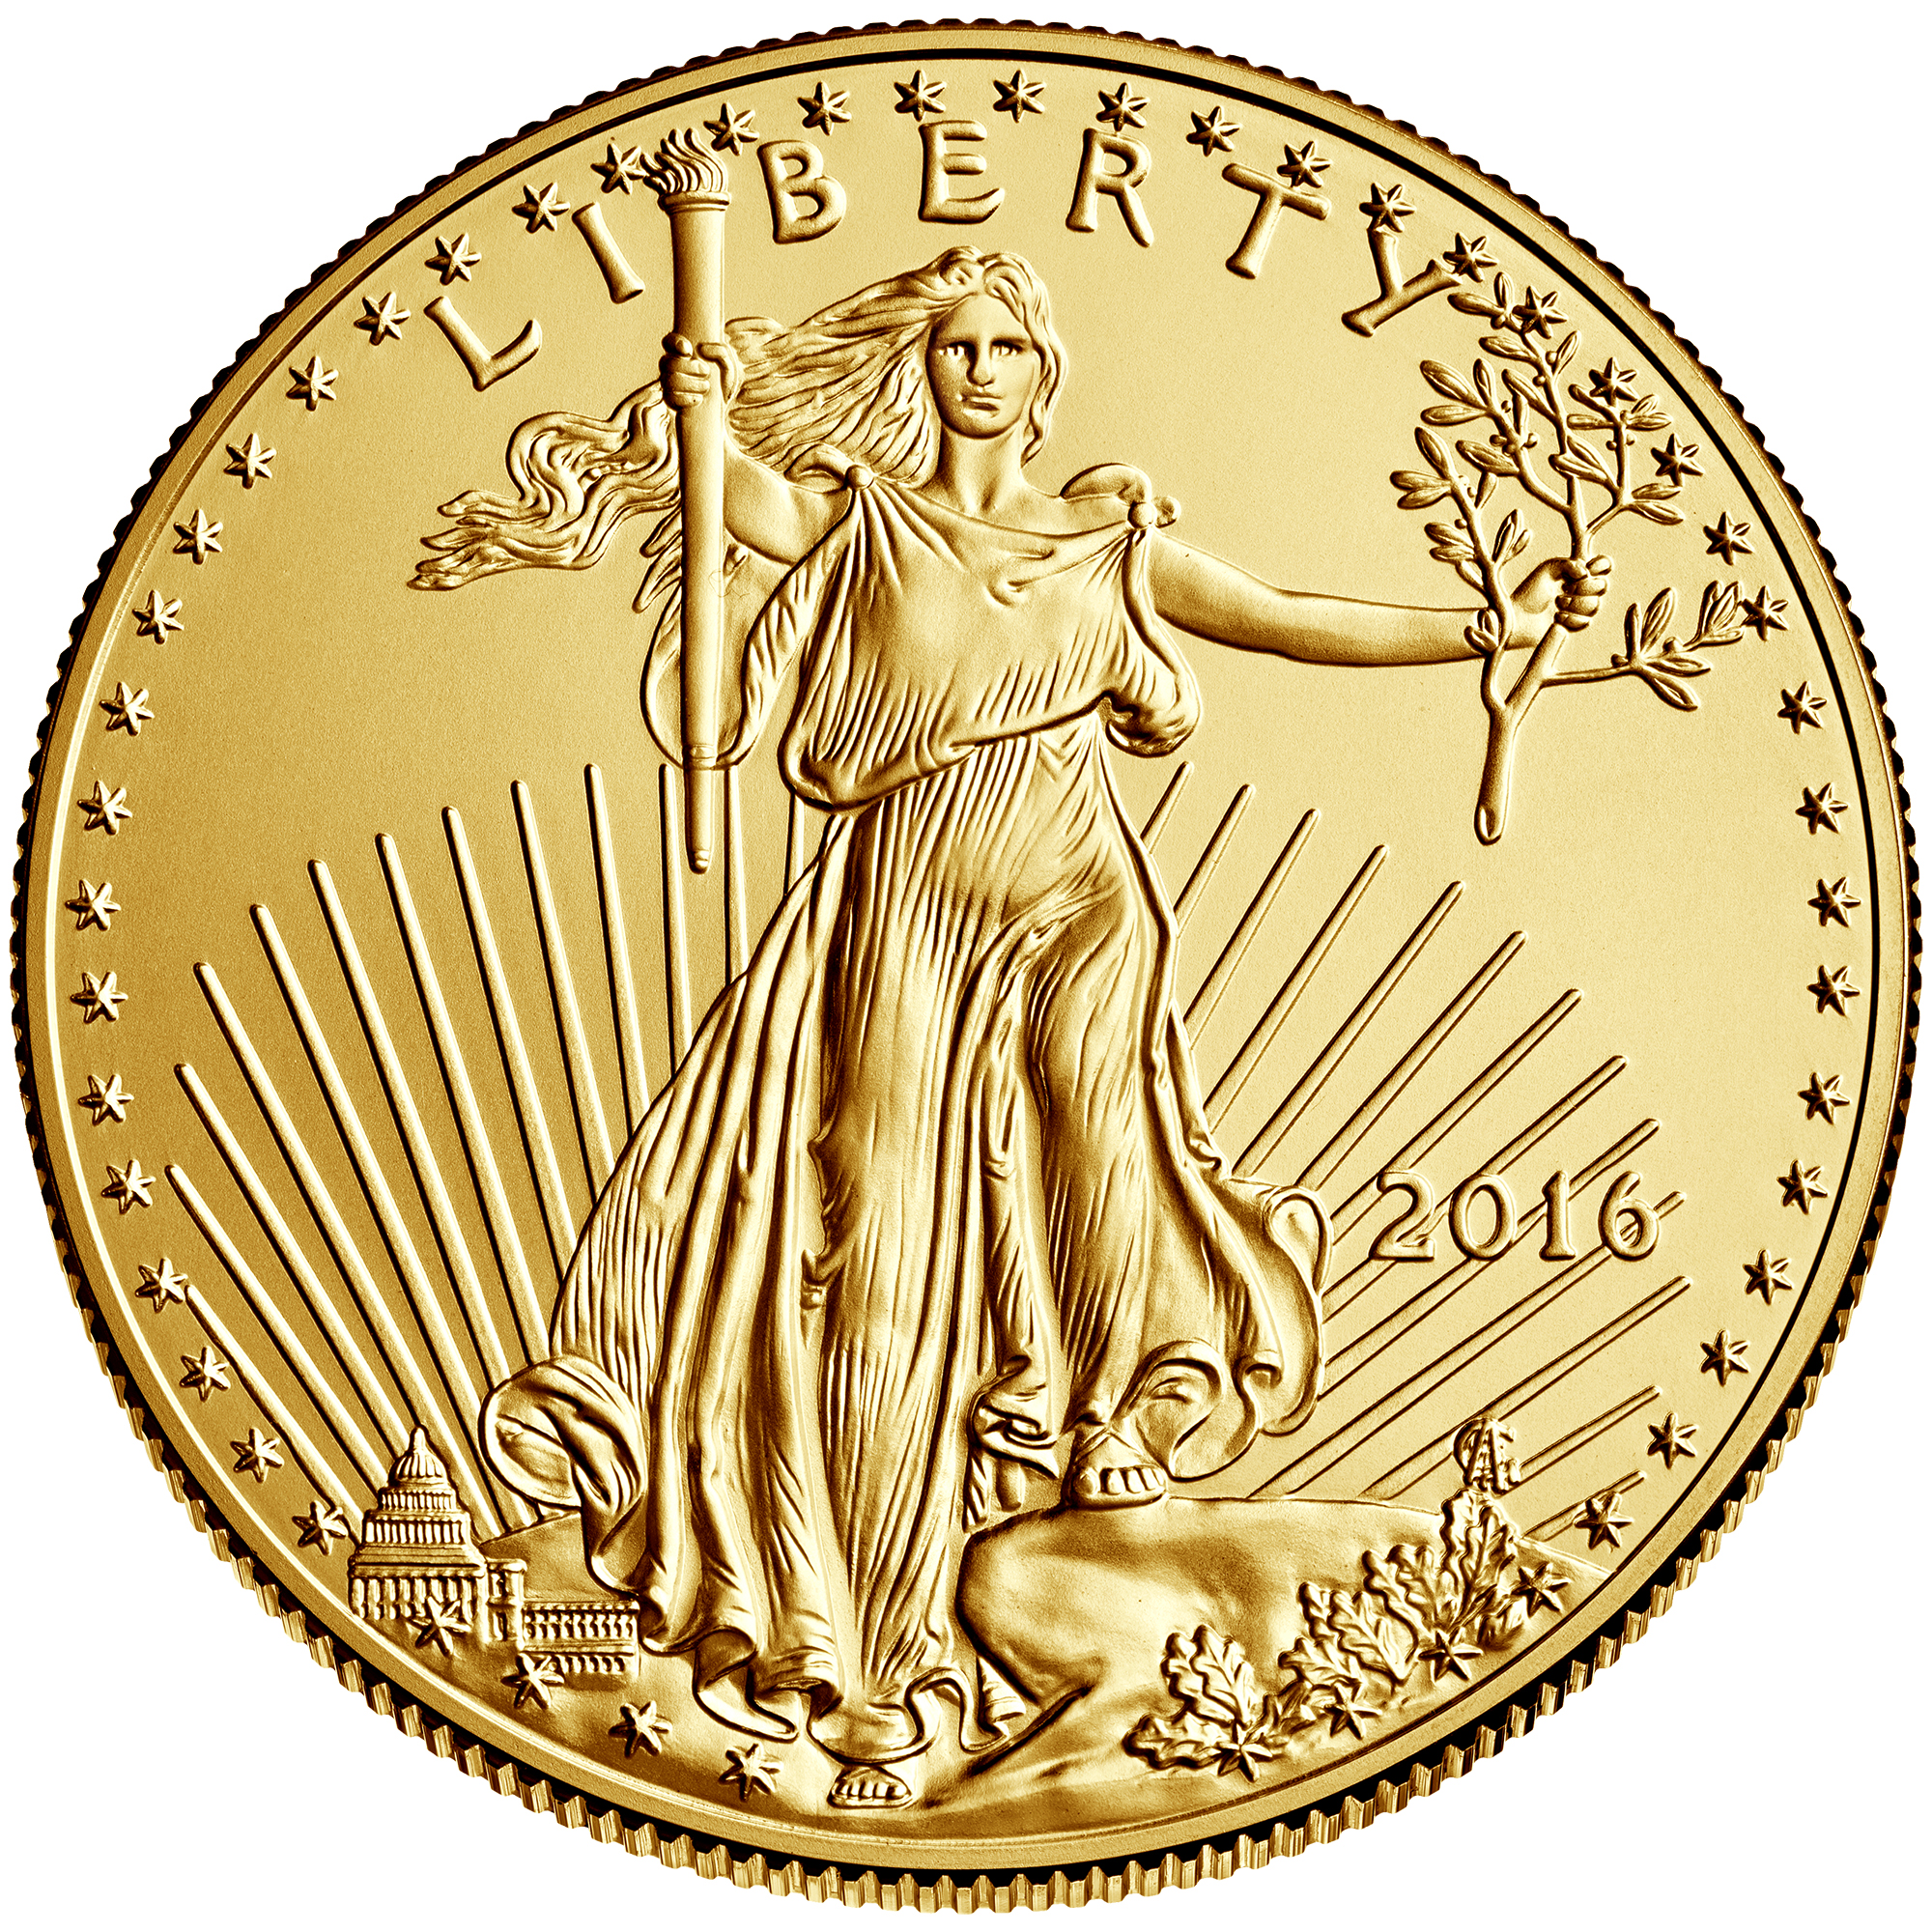 2016 1oz American Eagle Gold Bullion Coin - Obverse side (Type I)